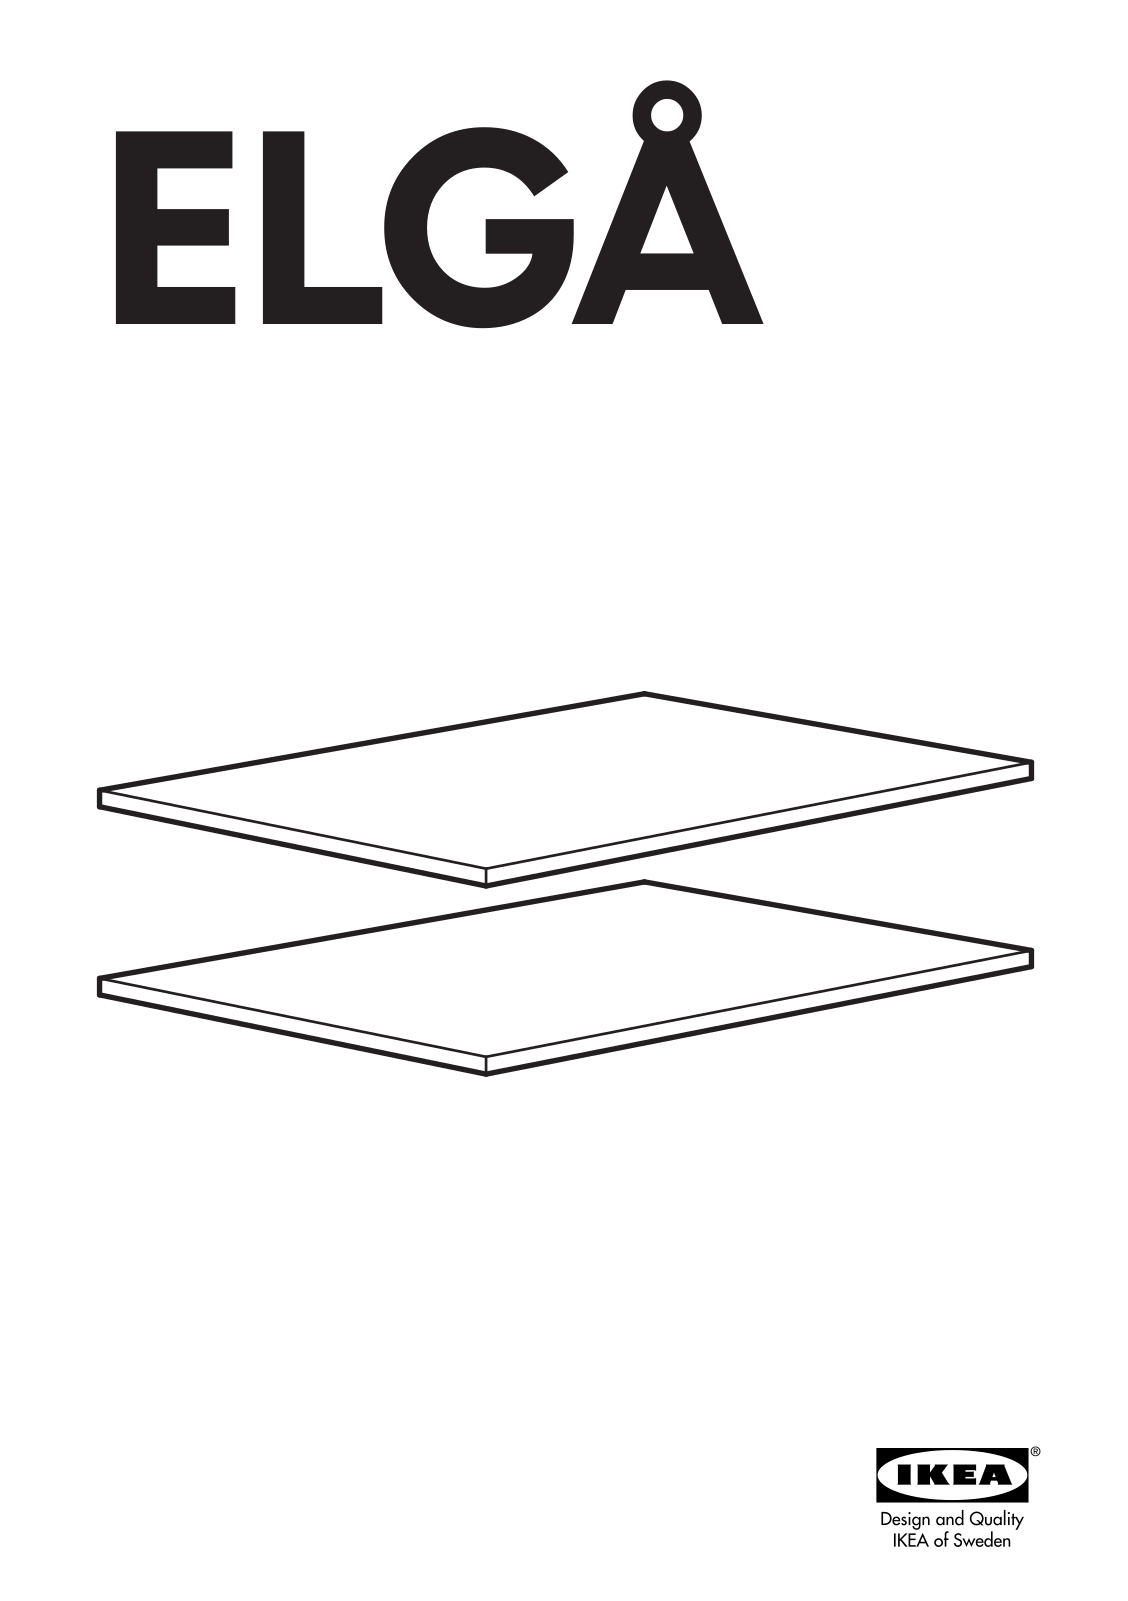 IKEA ELGÅ EXTRA SHELVES User Manual